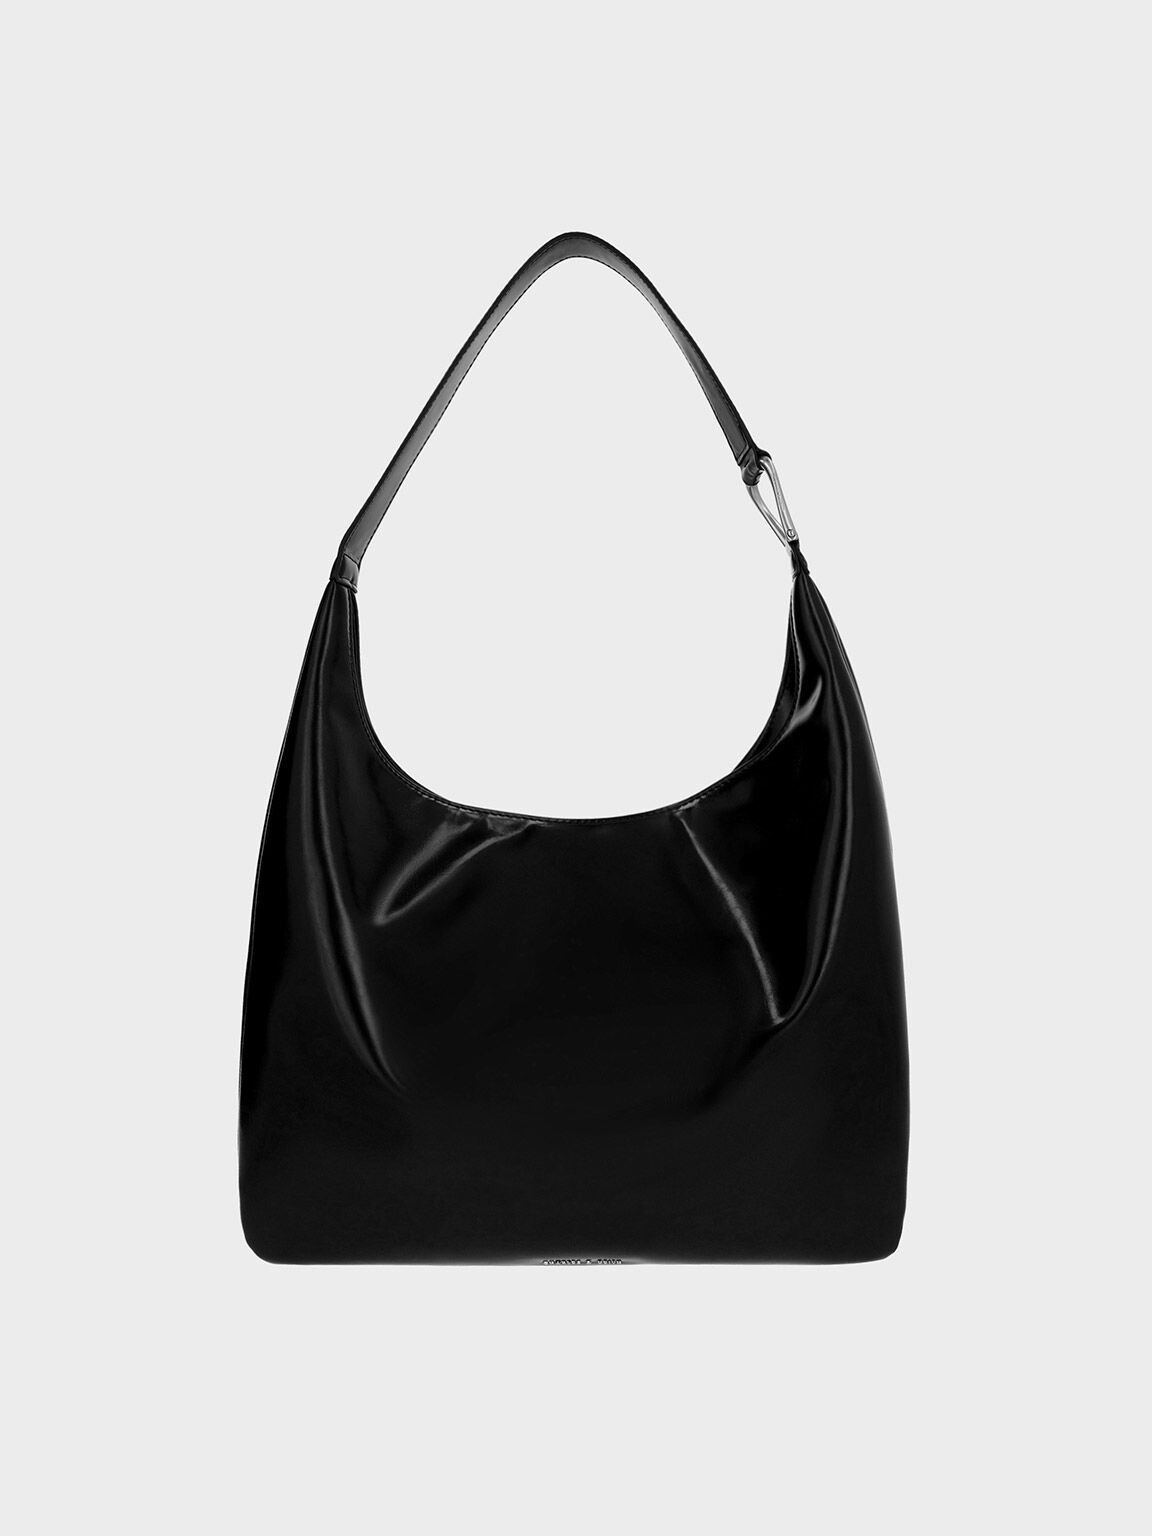 Women's Black Togo Leather One-handle Shoulder Hobo Bags Zipper Handbag |  Baginning